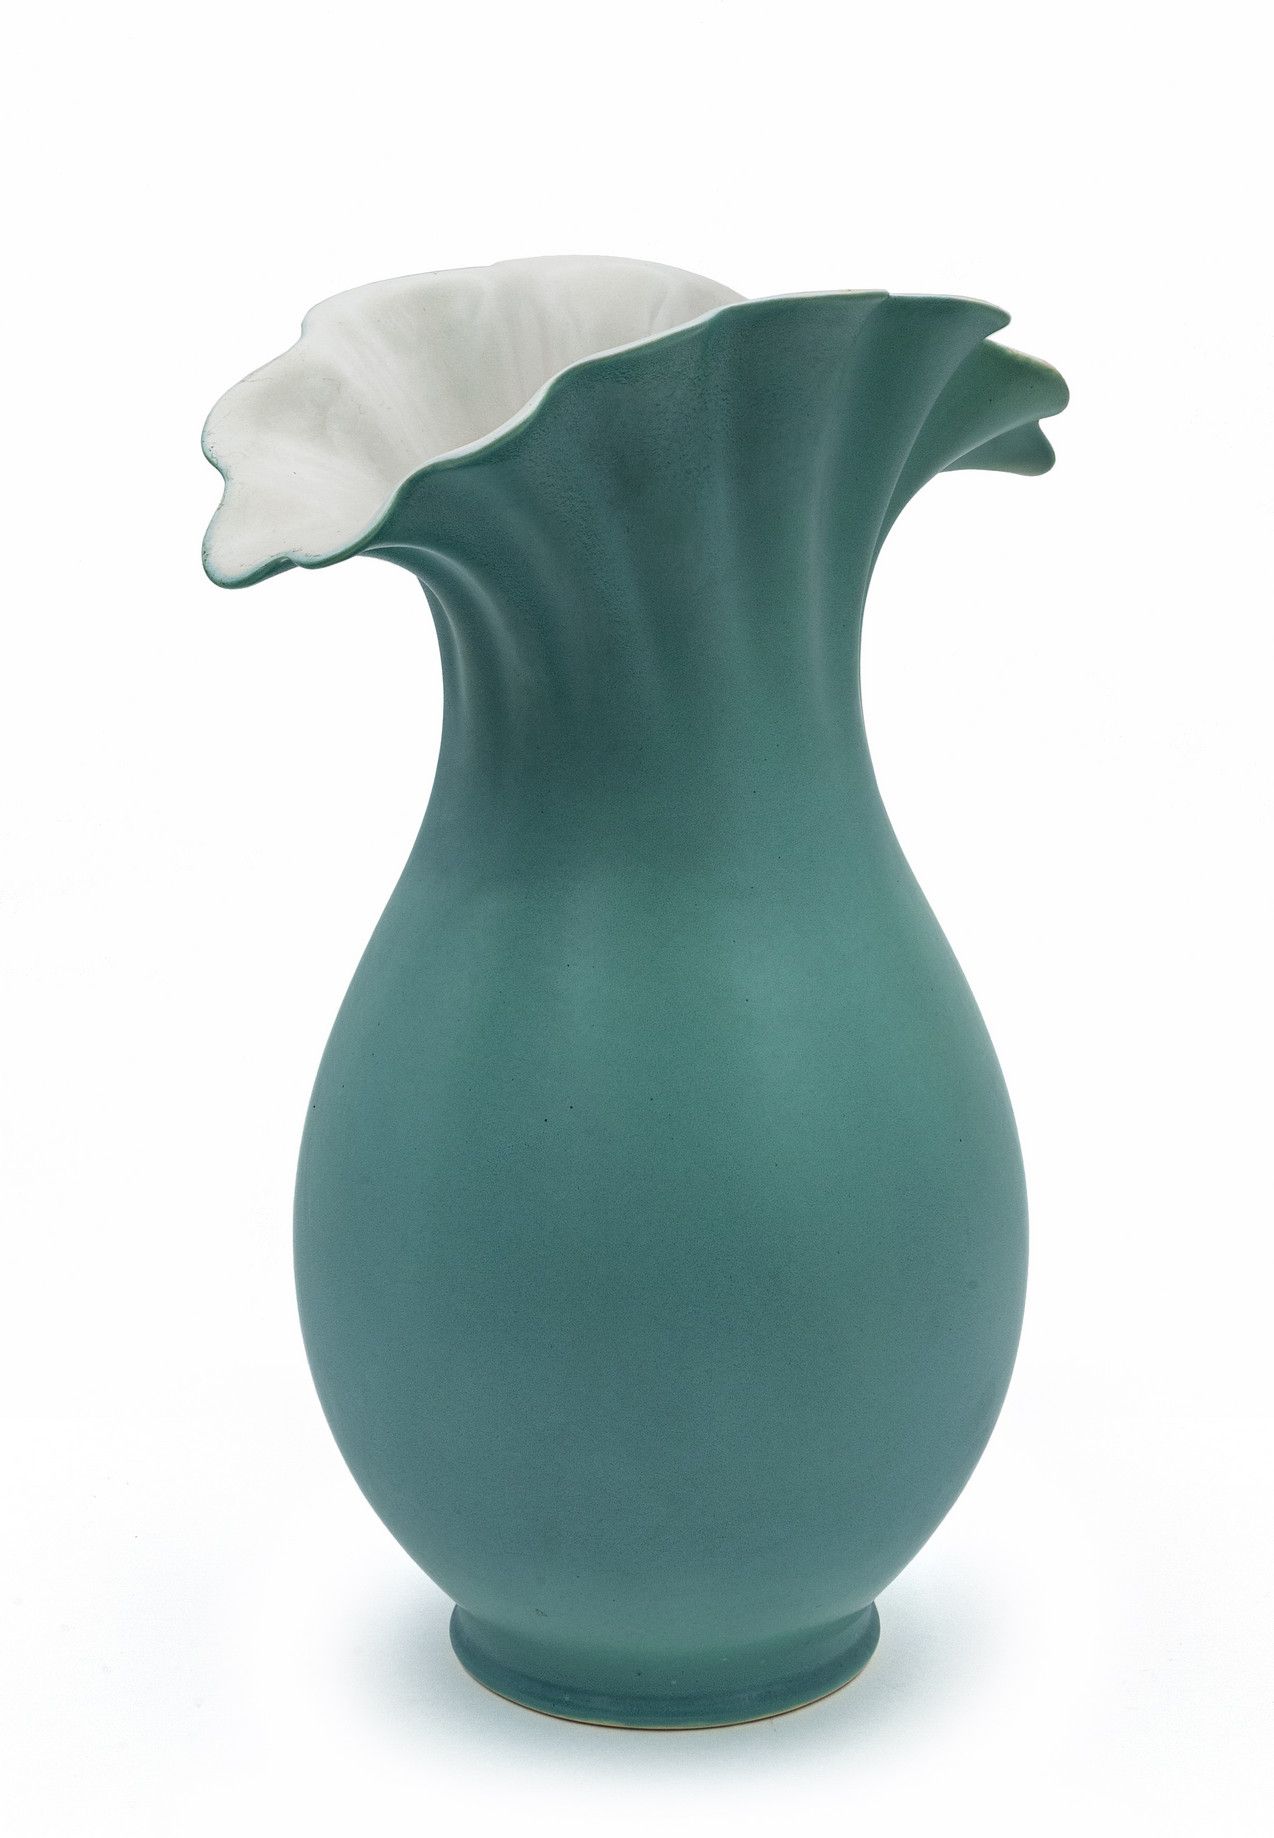 SAN CRISTOFORO RICHARD-GINORI SAN CRISTOFORO
1952年型号为'7177'的花瓶。
模压陶瓷，半哑光釉。
标有'Ri&hellip;